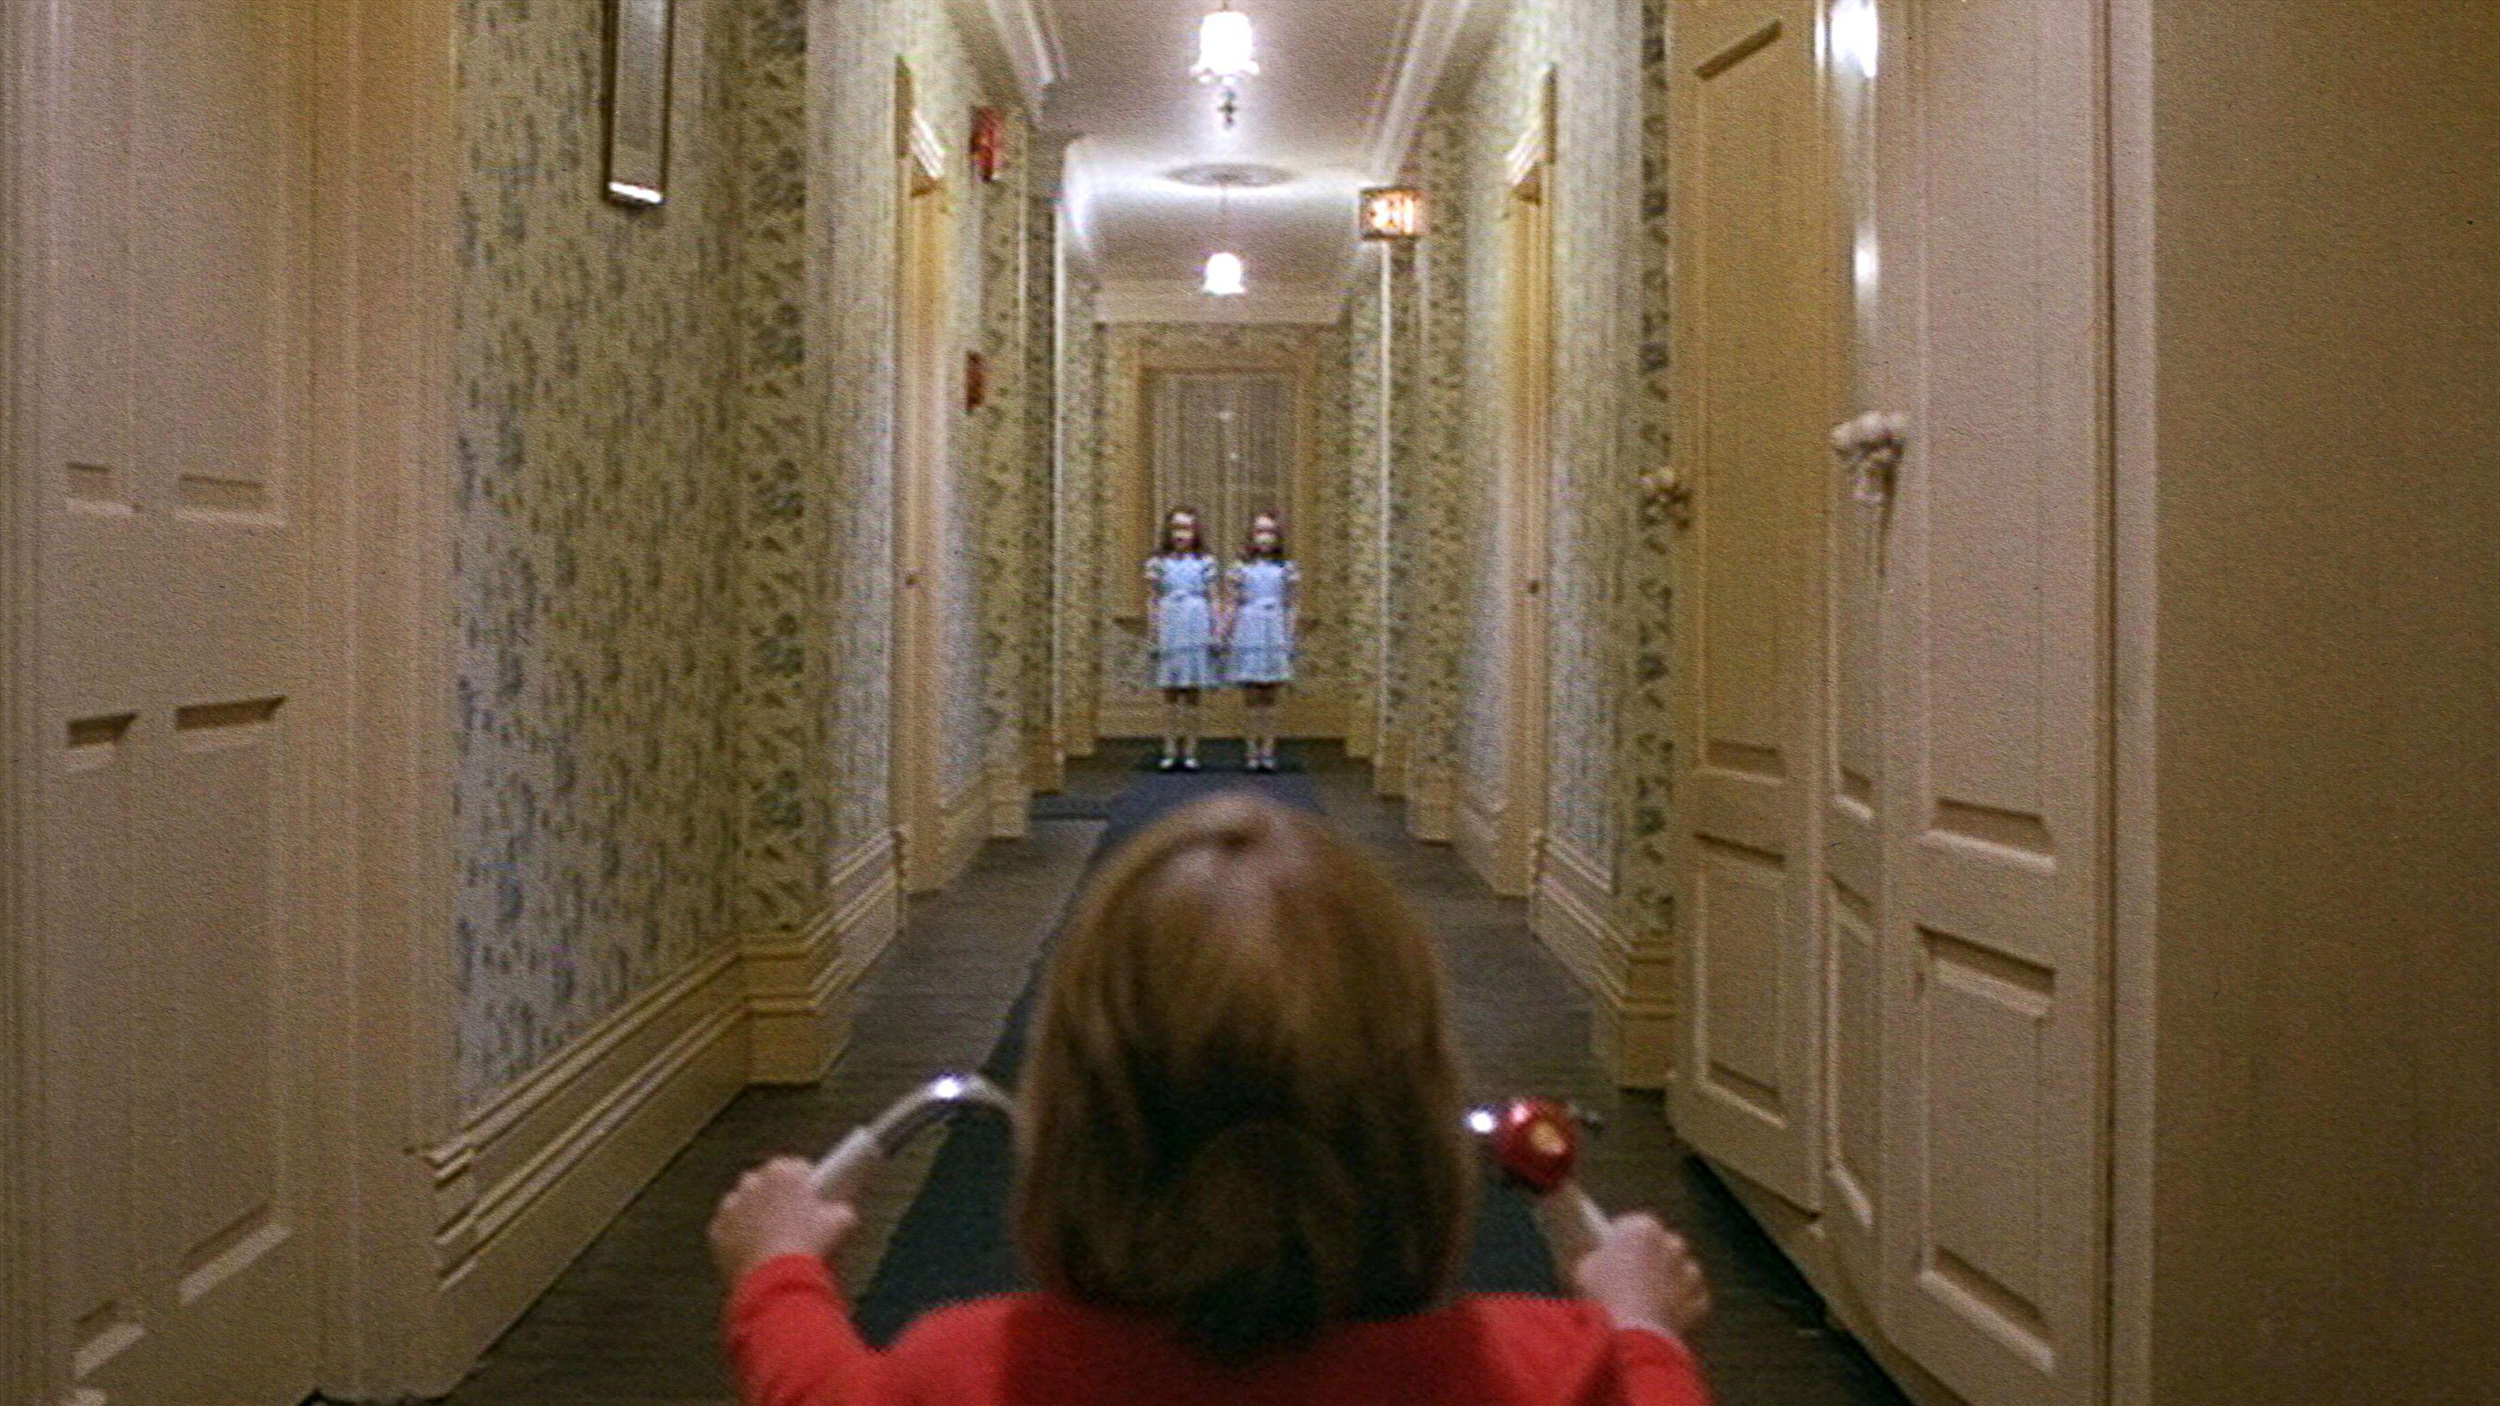 A girl is walking down a hallway in a red shirt, feeling fear.